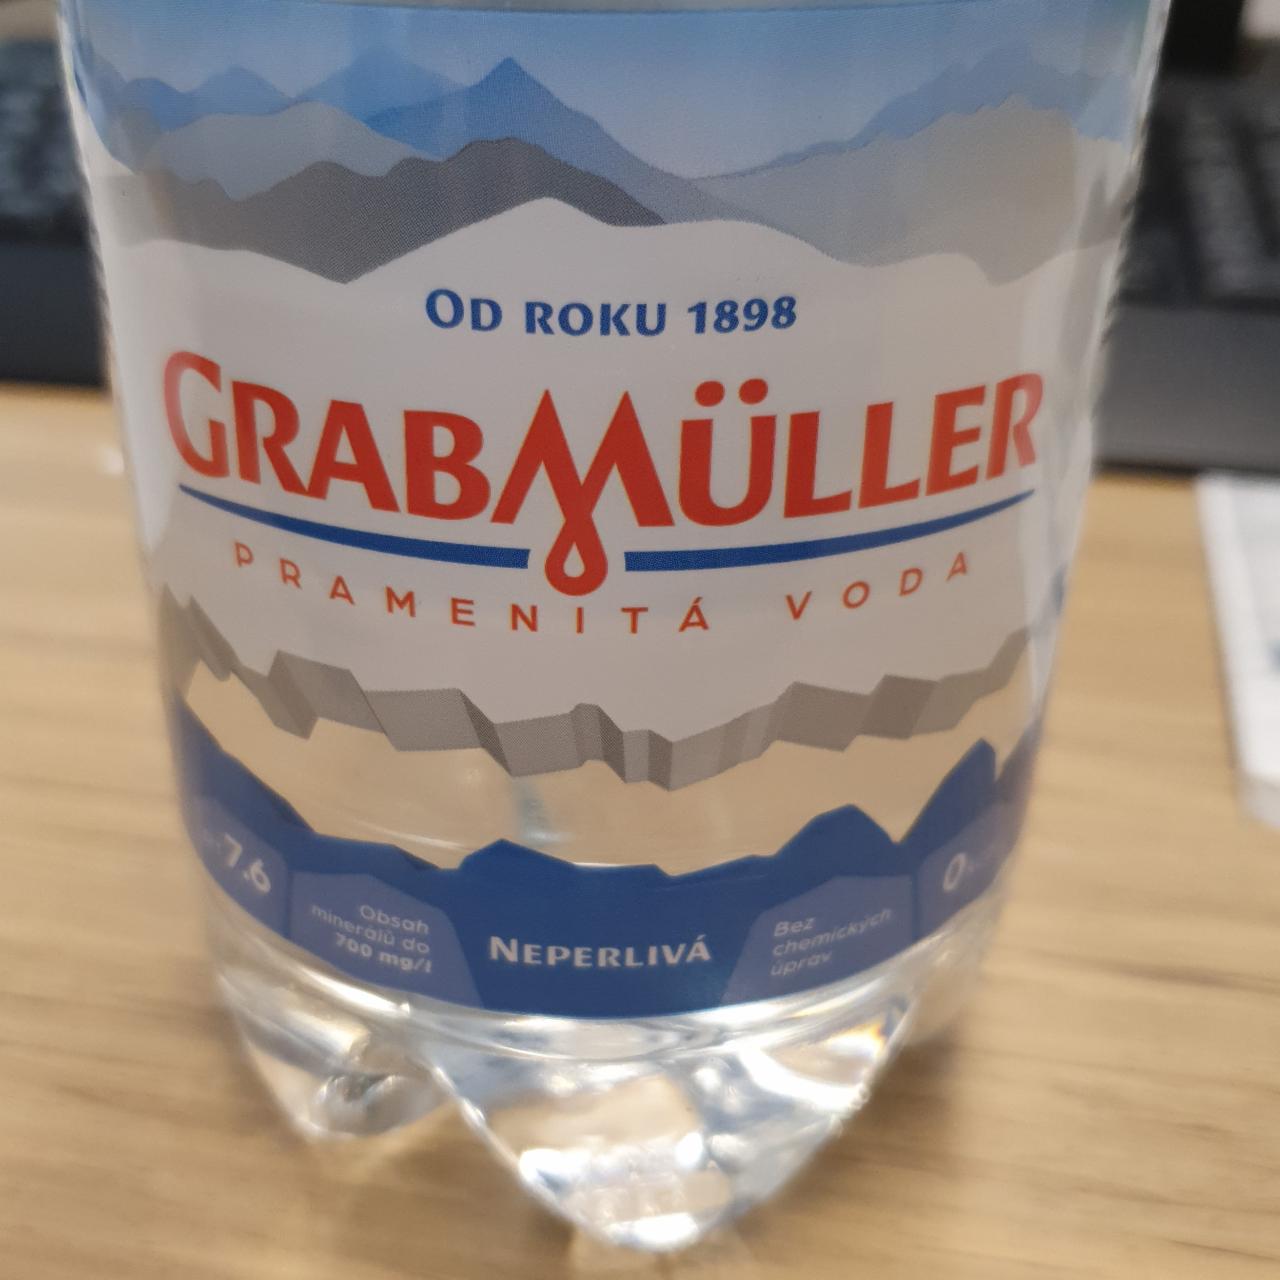 Fotografie - pramenitá voda Grabmüller